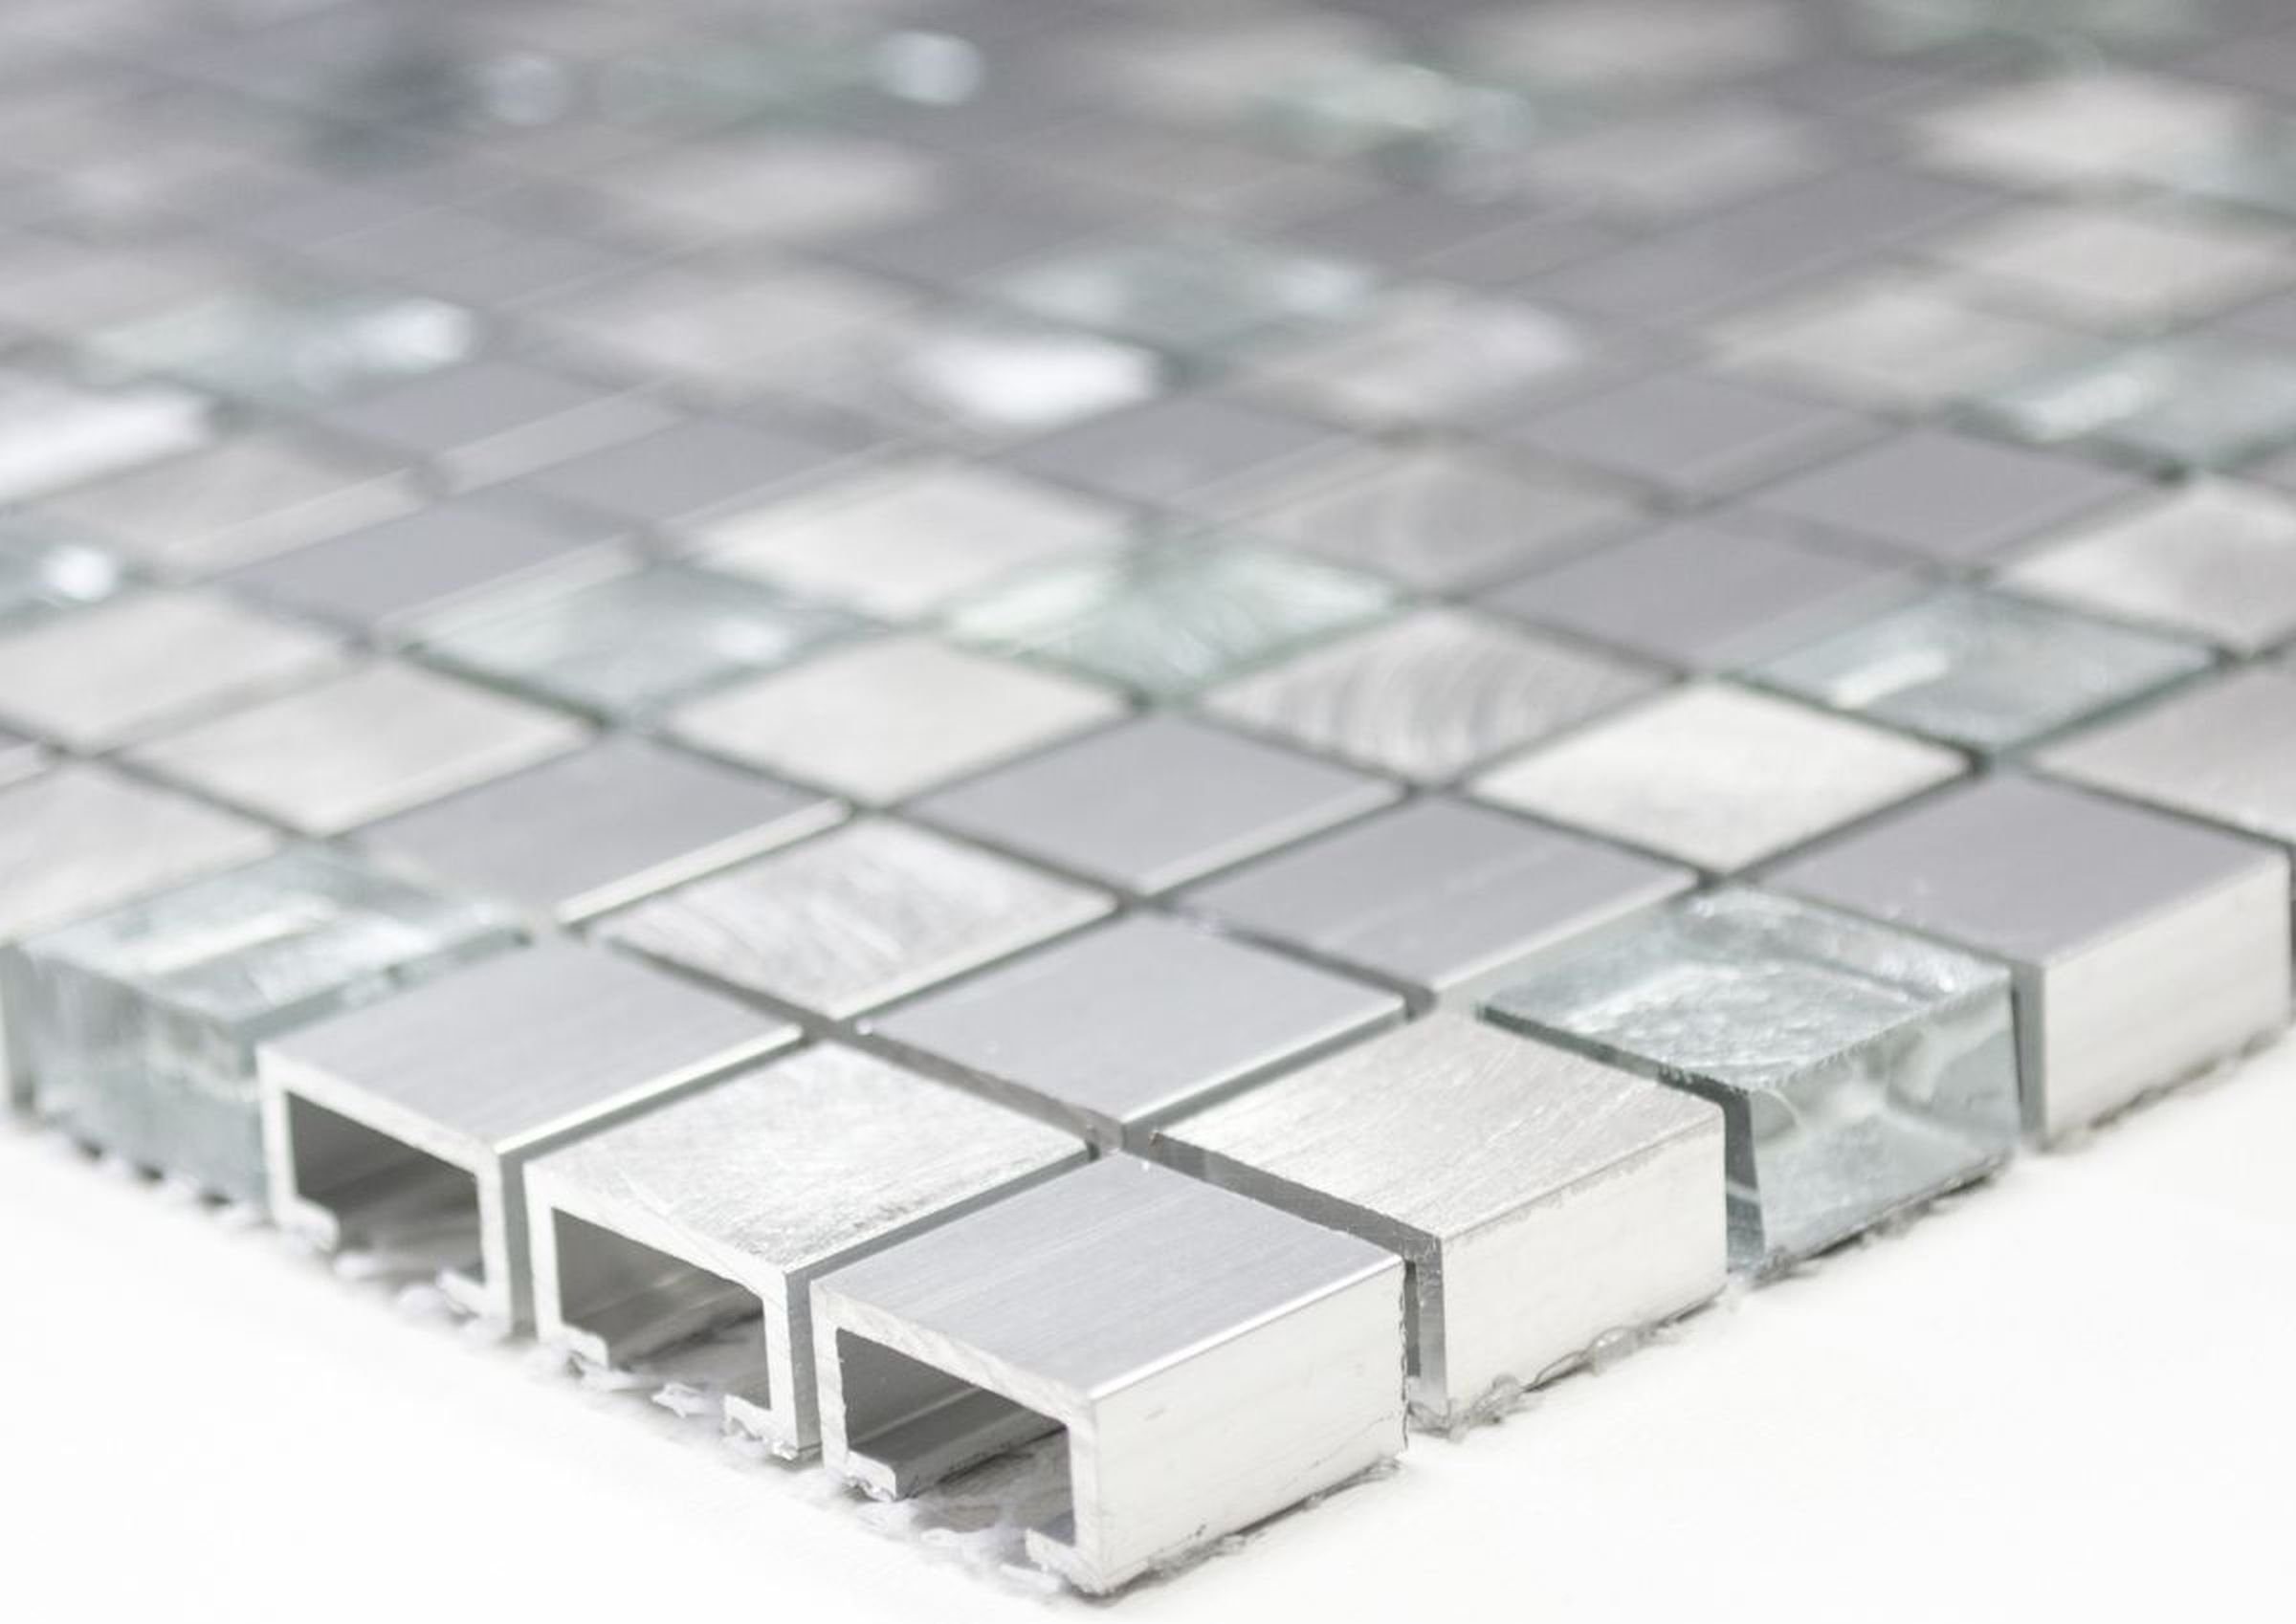 Mosani Mosaikfliesen Aluminium silber Fliese Küchenrückwand Glasmosaik Mosaik